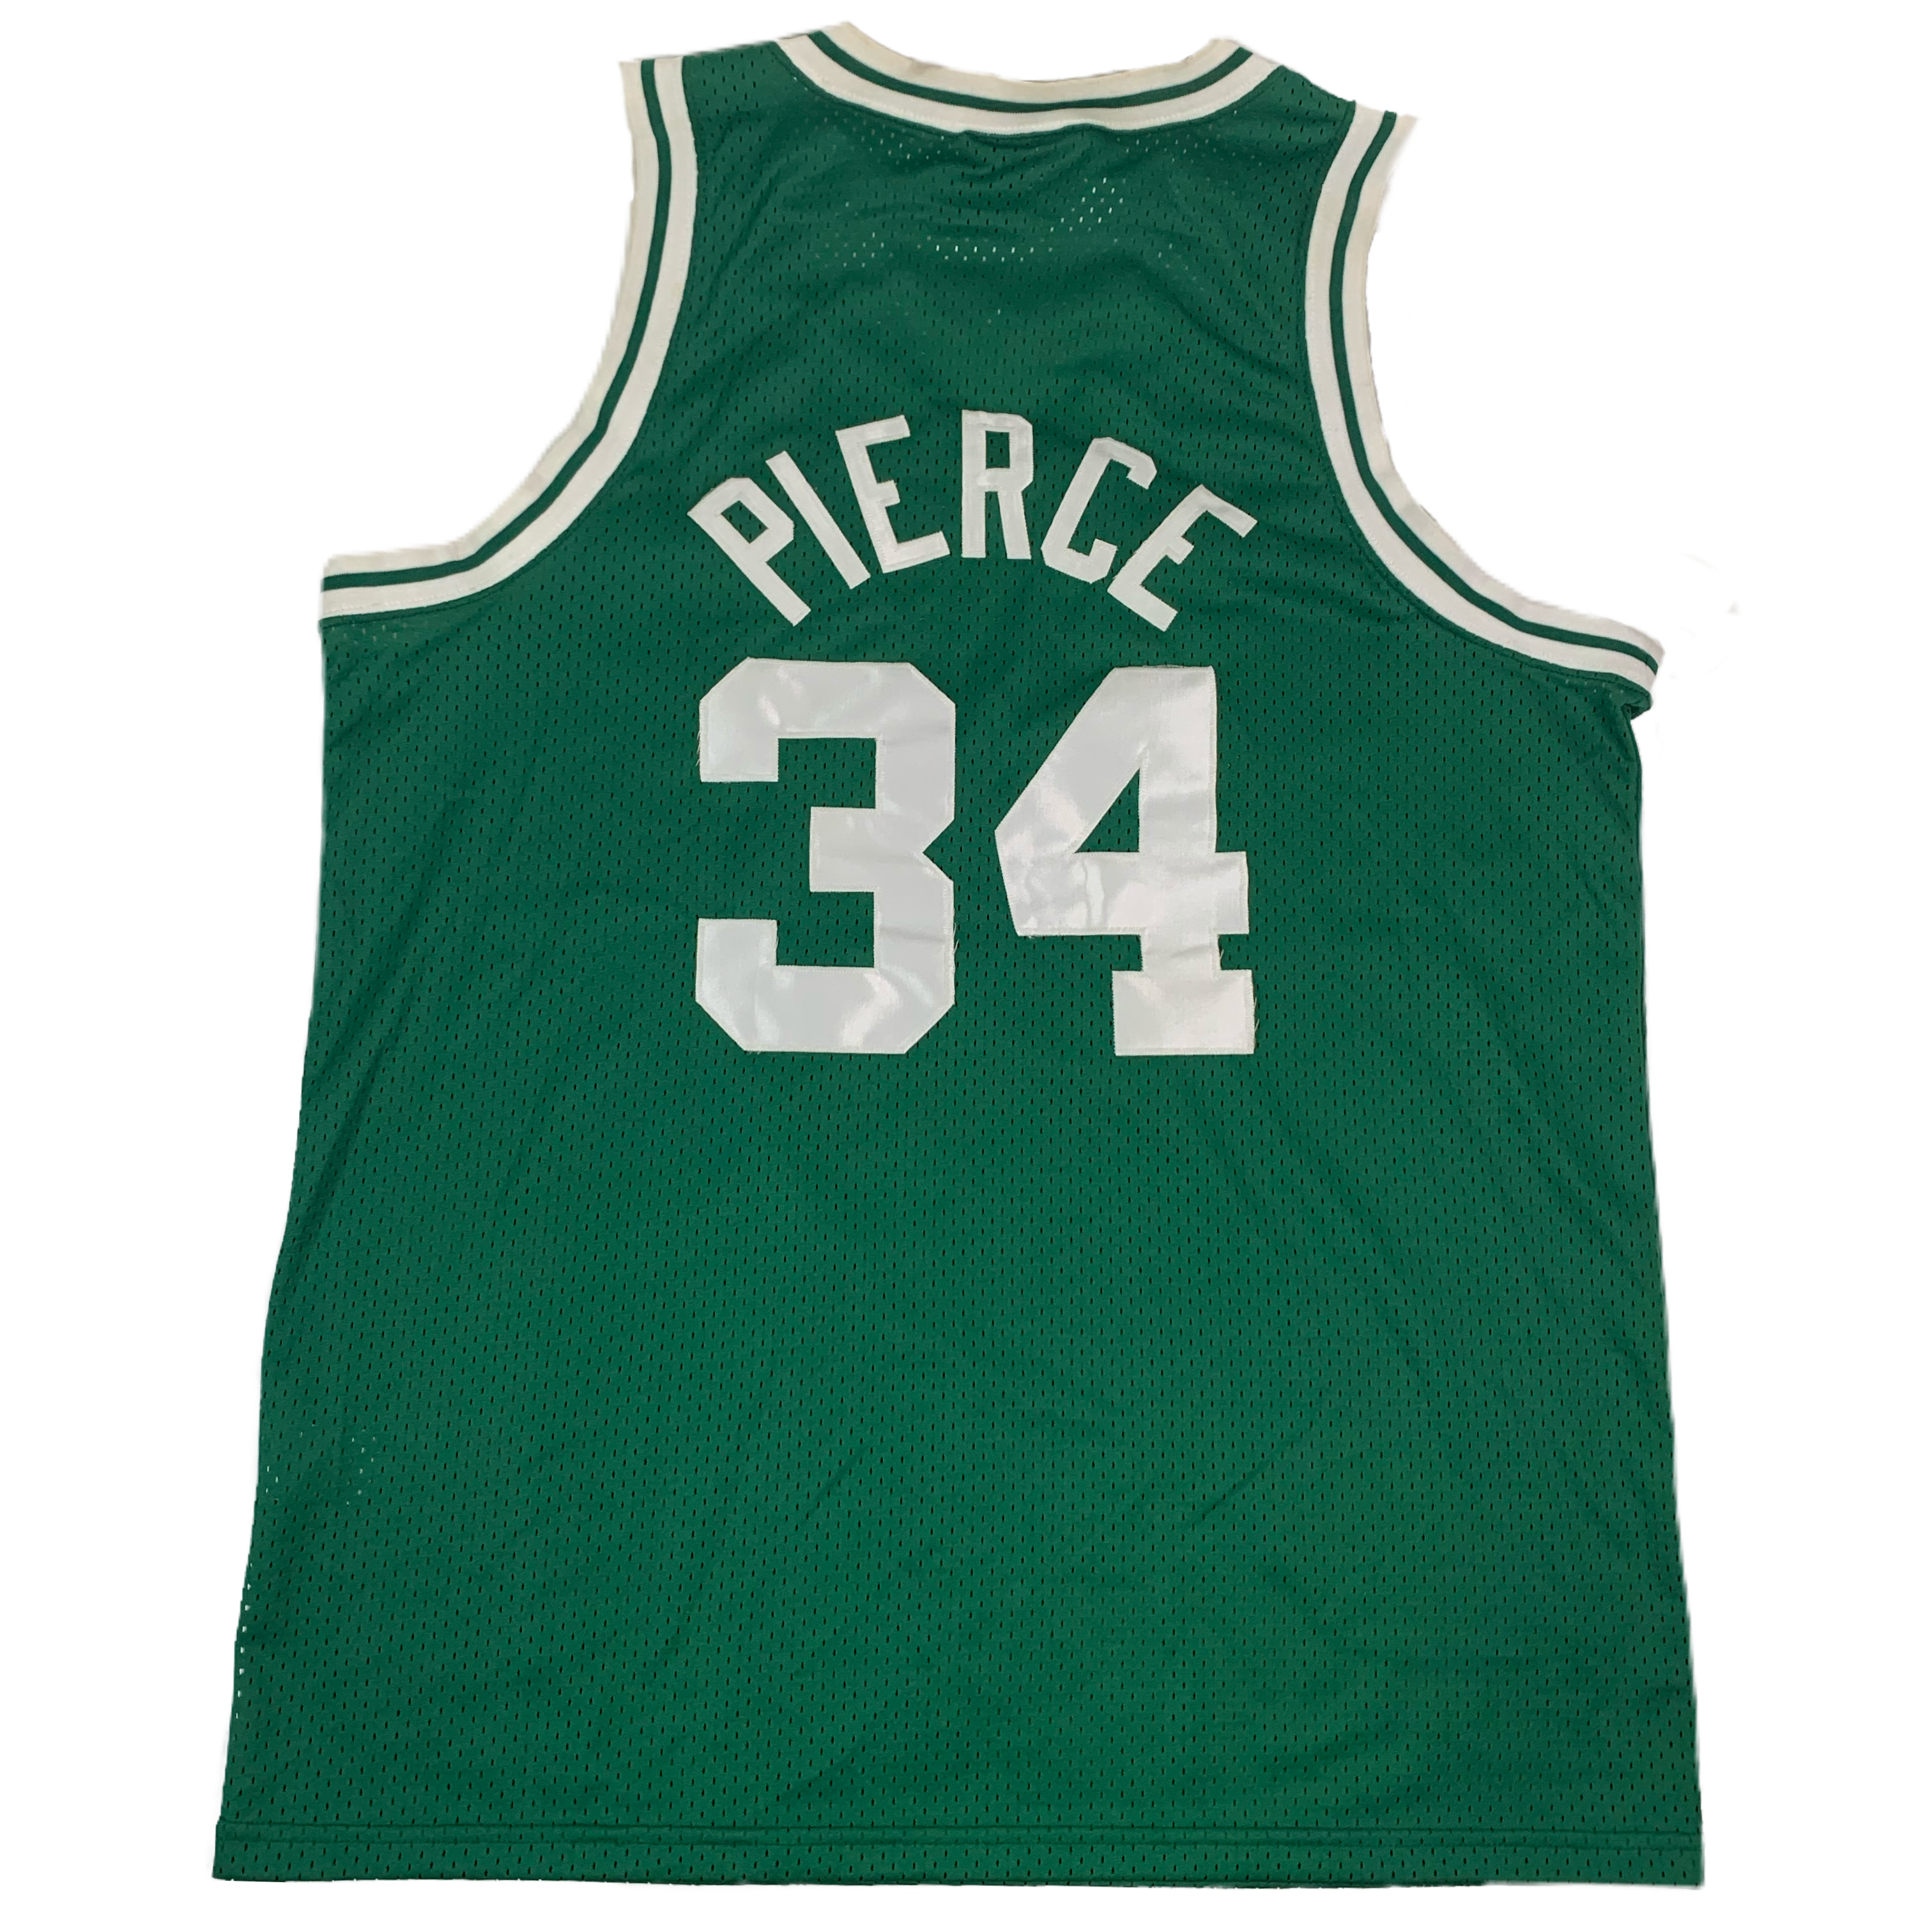 Celtics to retire Paul Pierce's No. 34